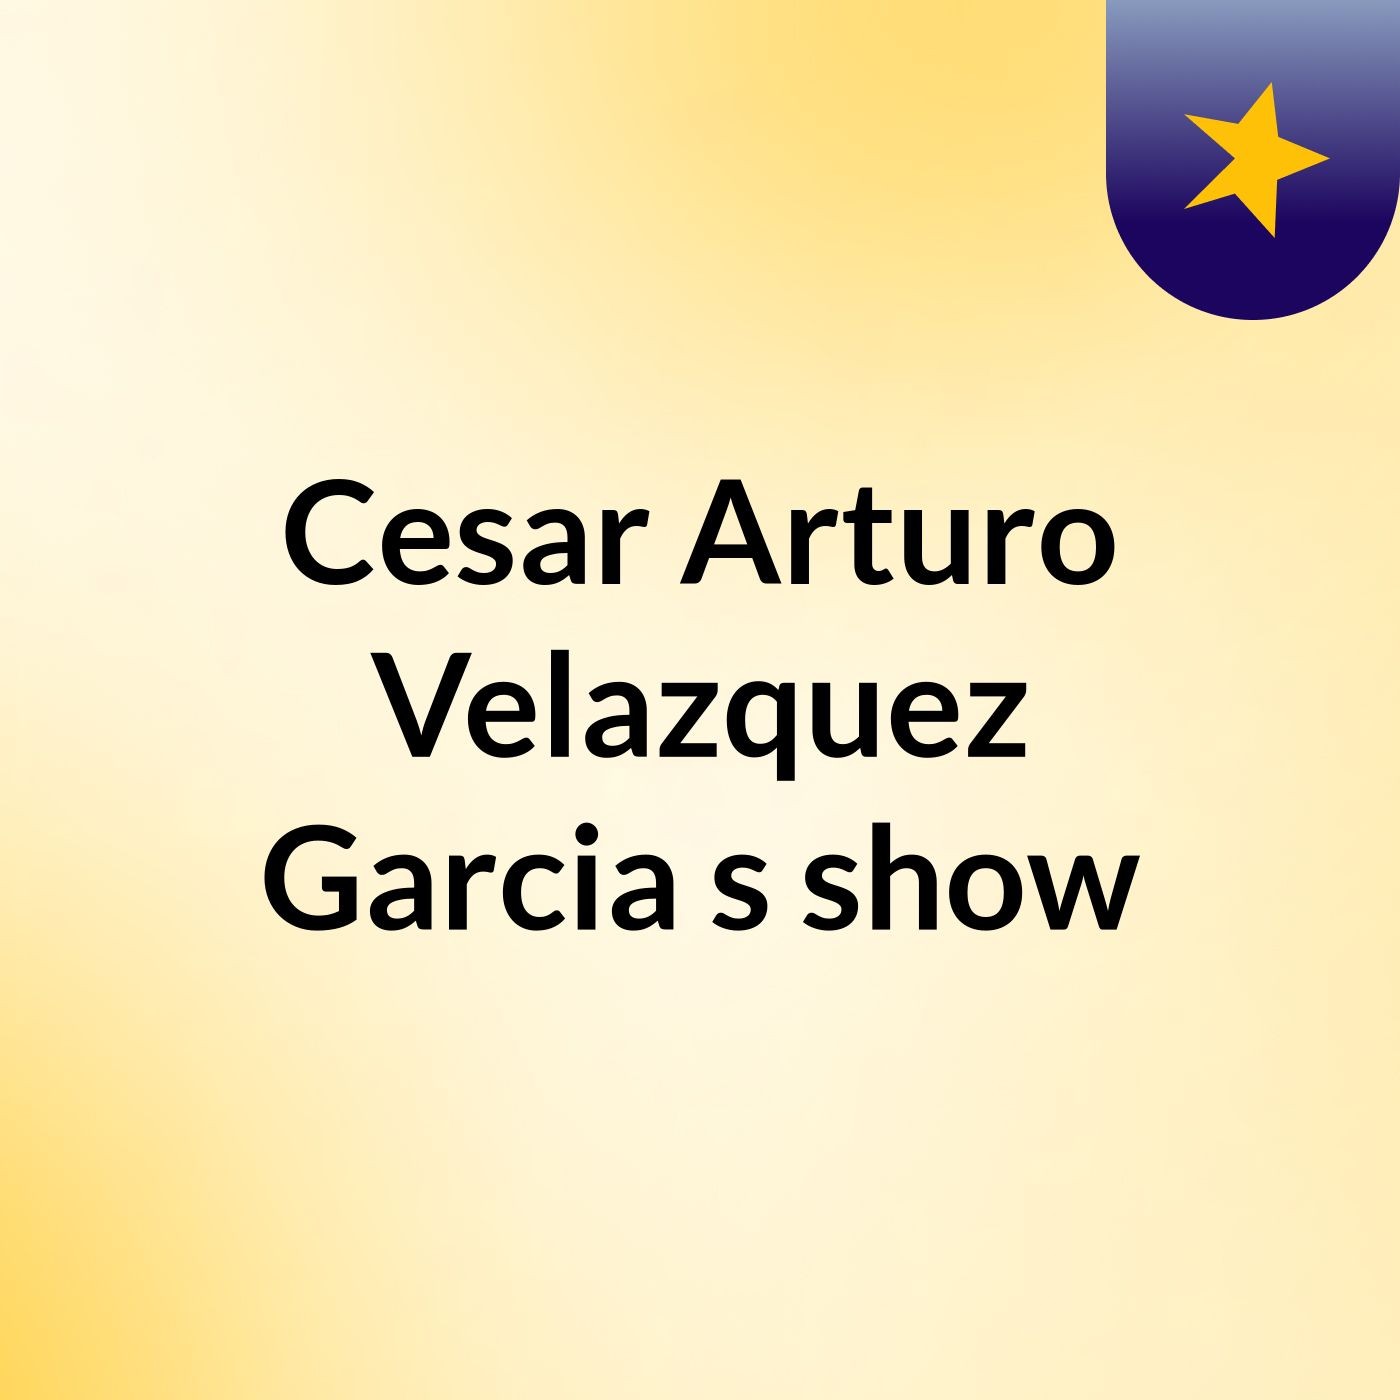 Cesar Arturo Velazquez Garcia's show